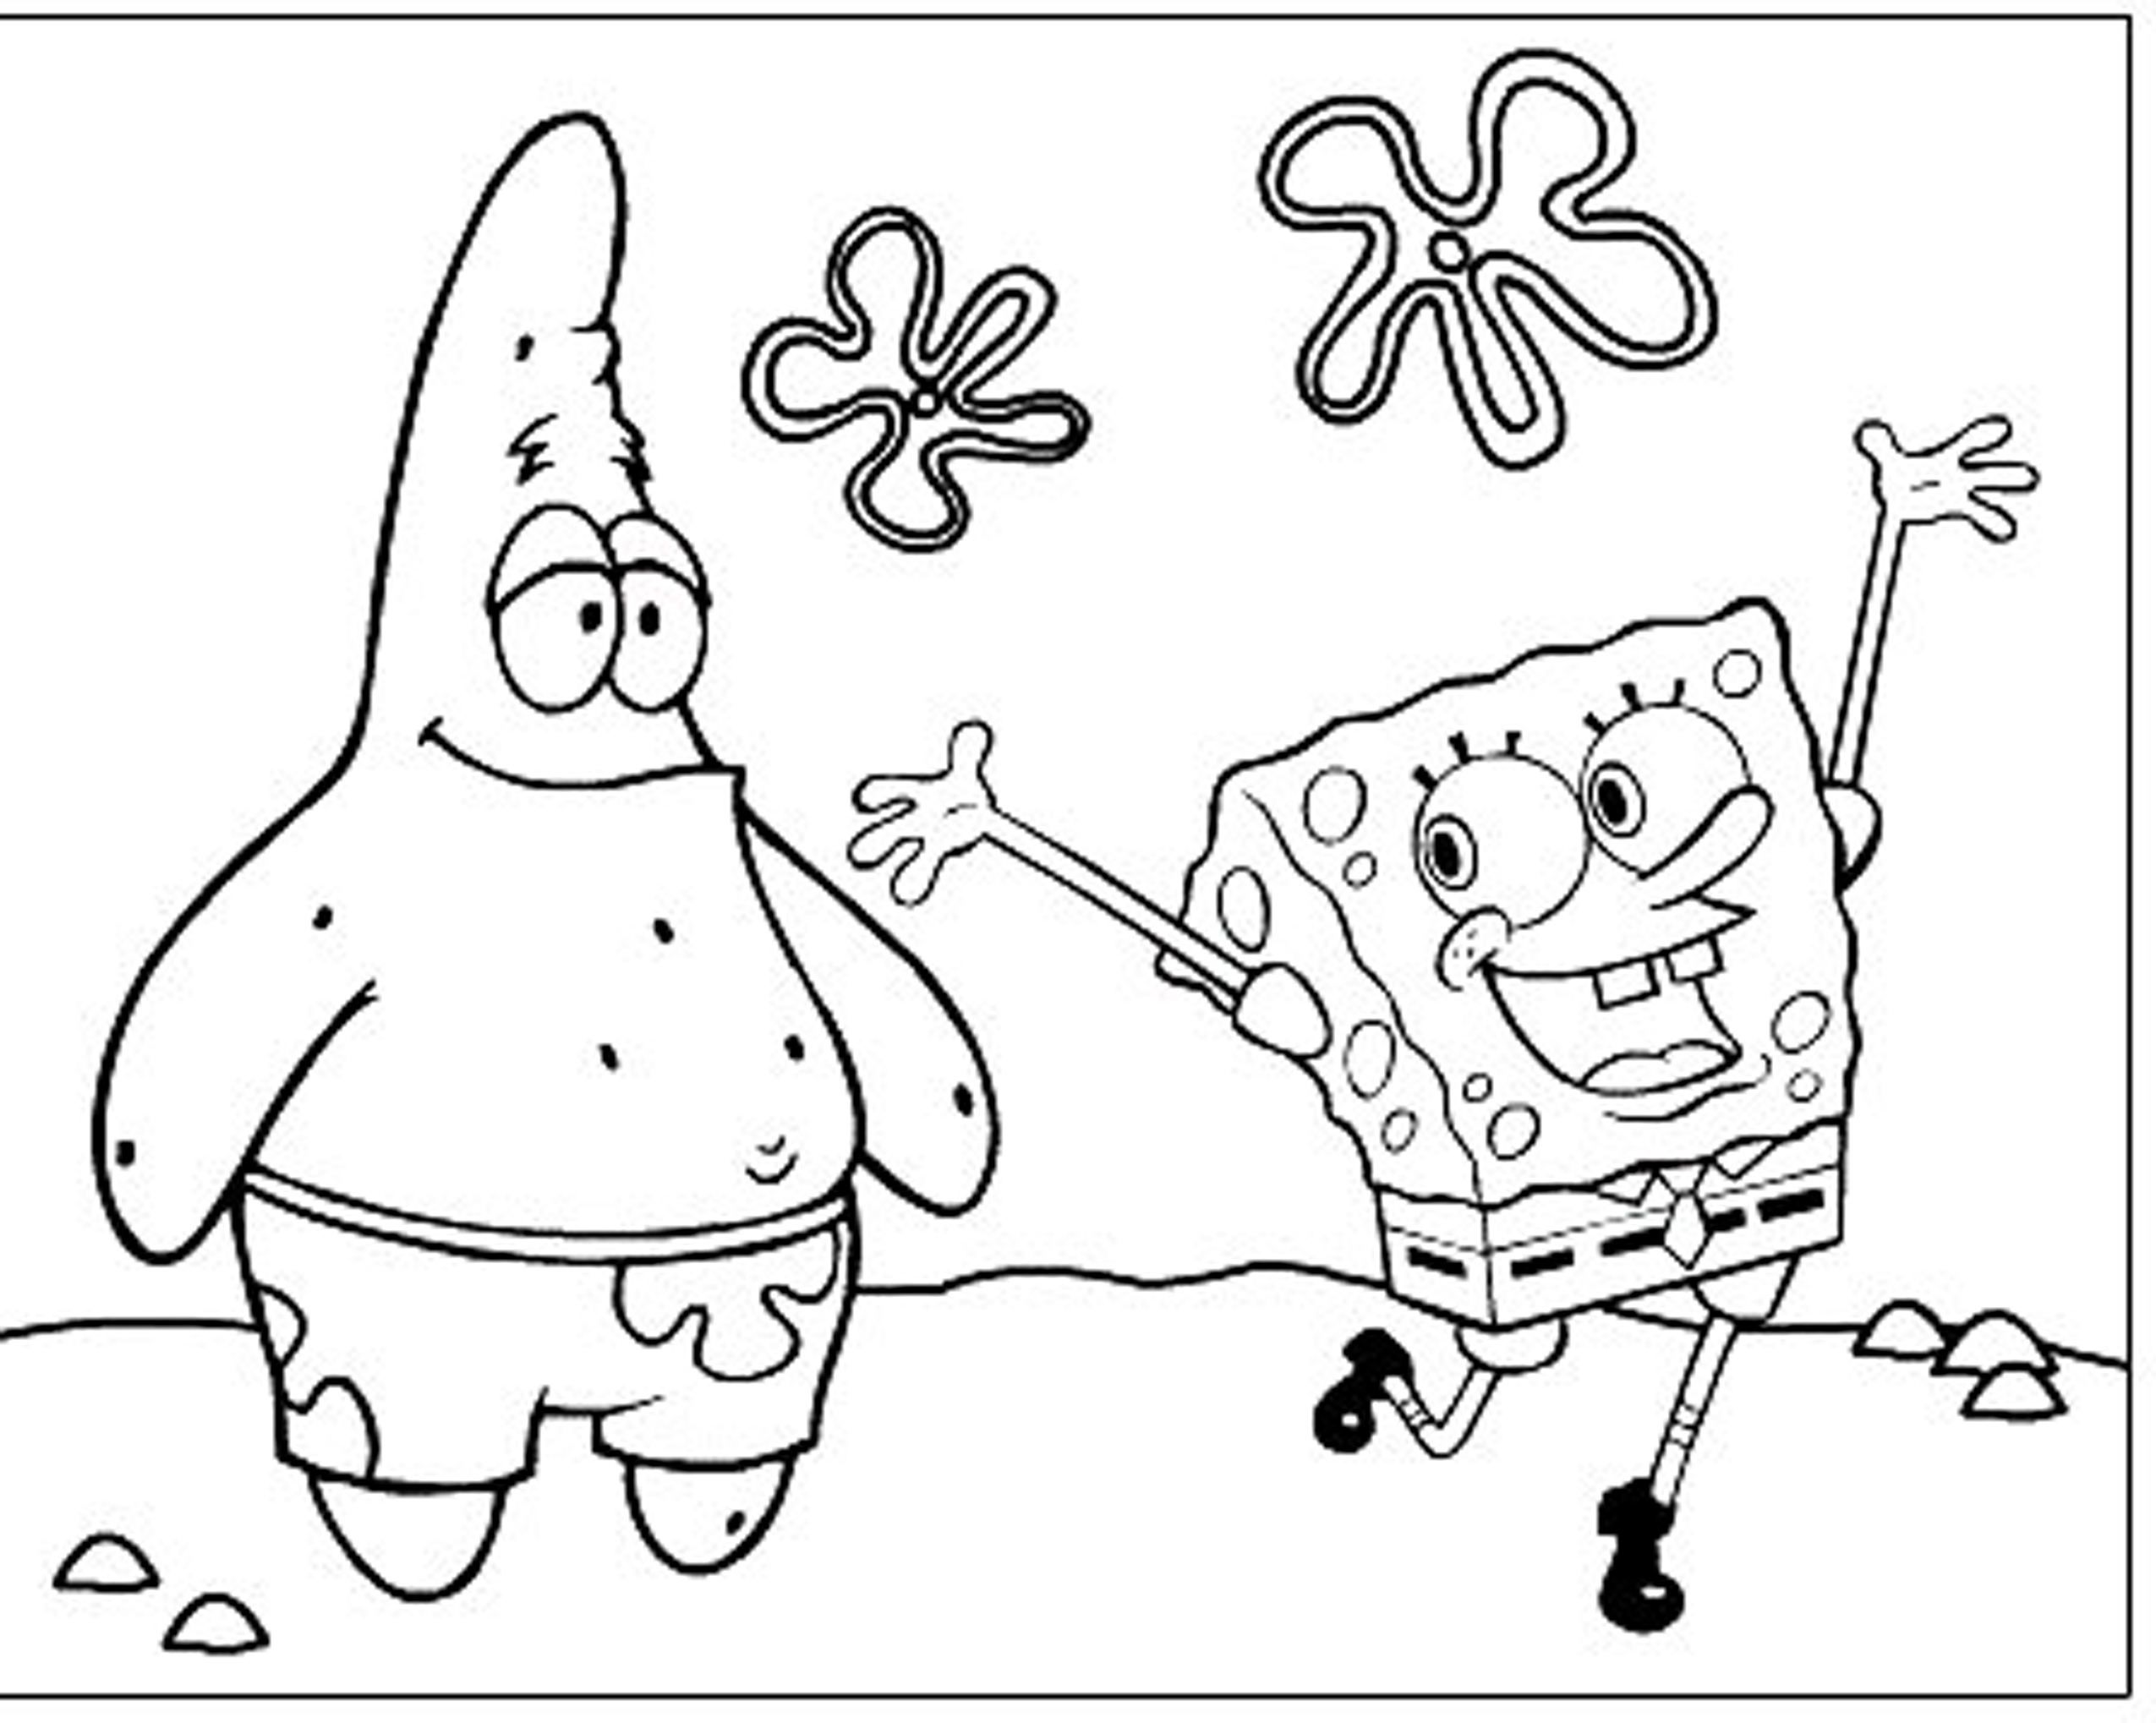 Free Spongebob And Patrick Coloring Page, Download Free Spongebob ...